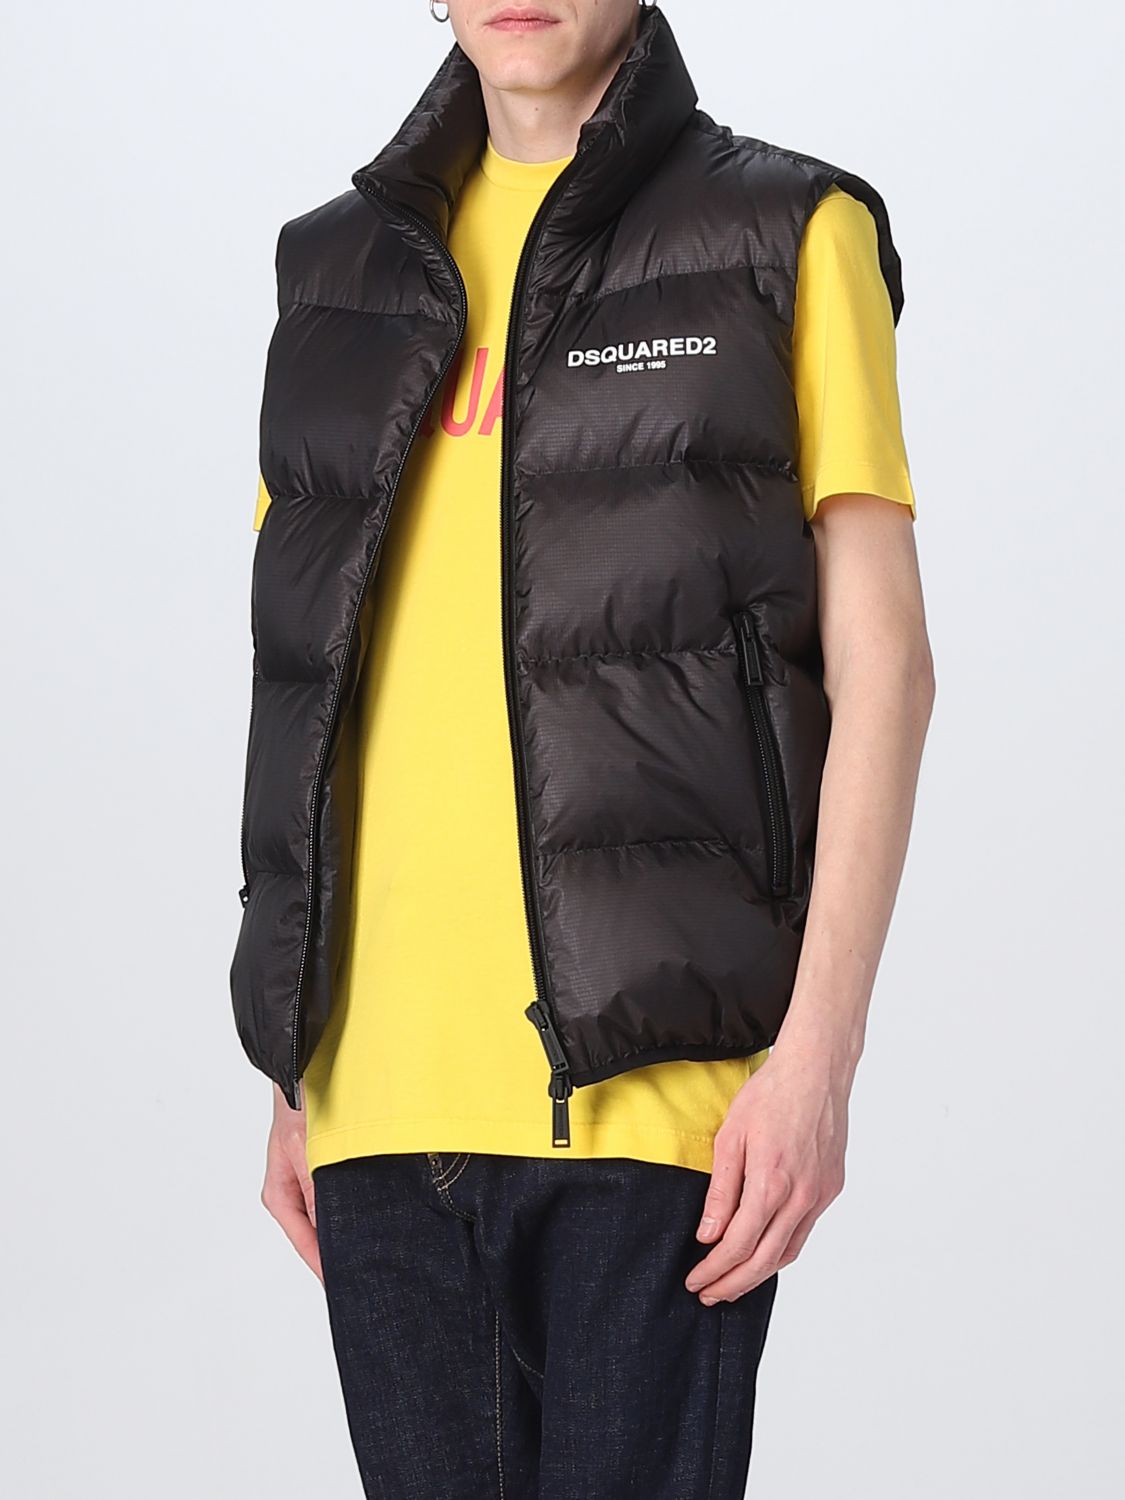 DSQUARED2 vest in shiny nylon  Orange  Dsquared2 suit vest  S74FB0278S54056 online on GIGLIOCOM